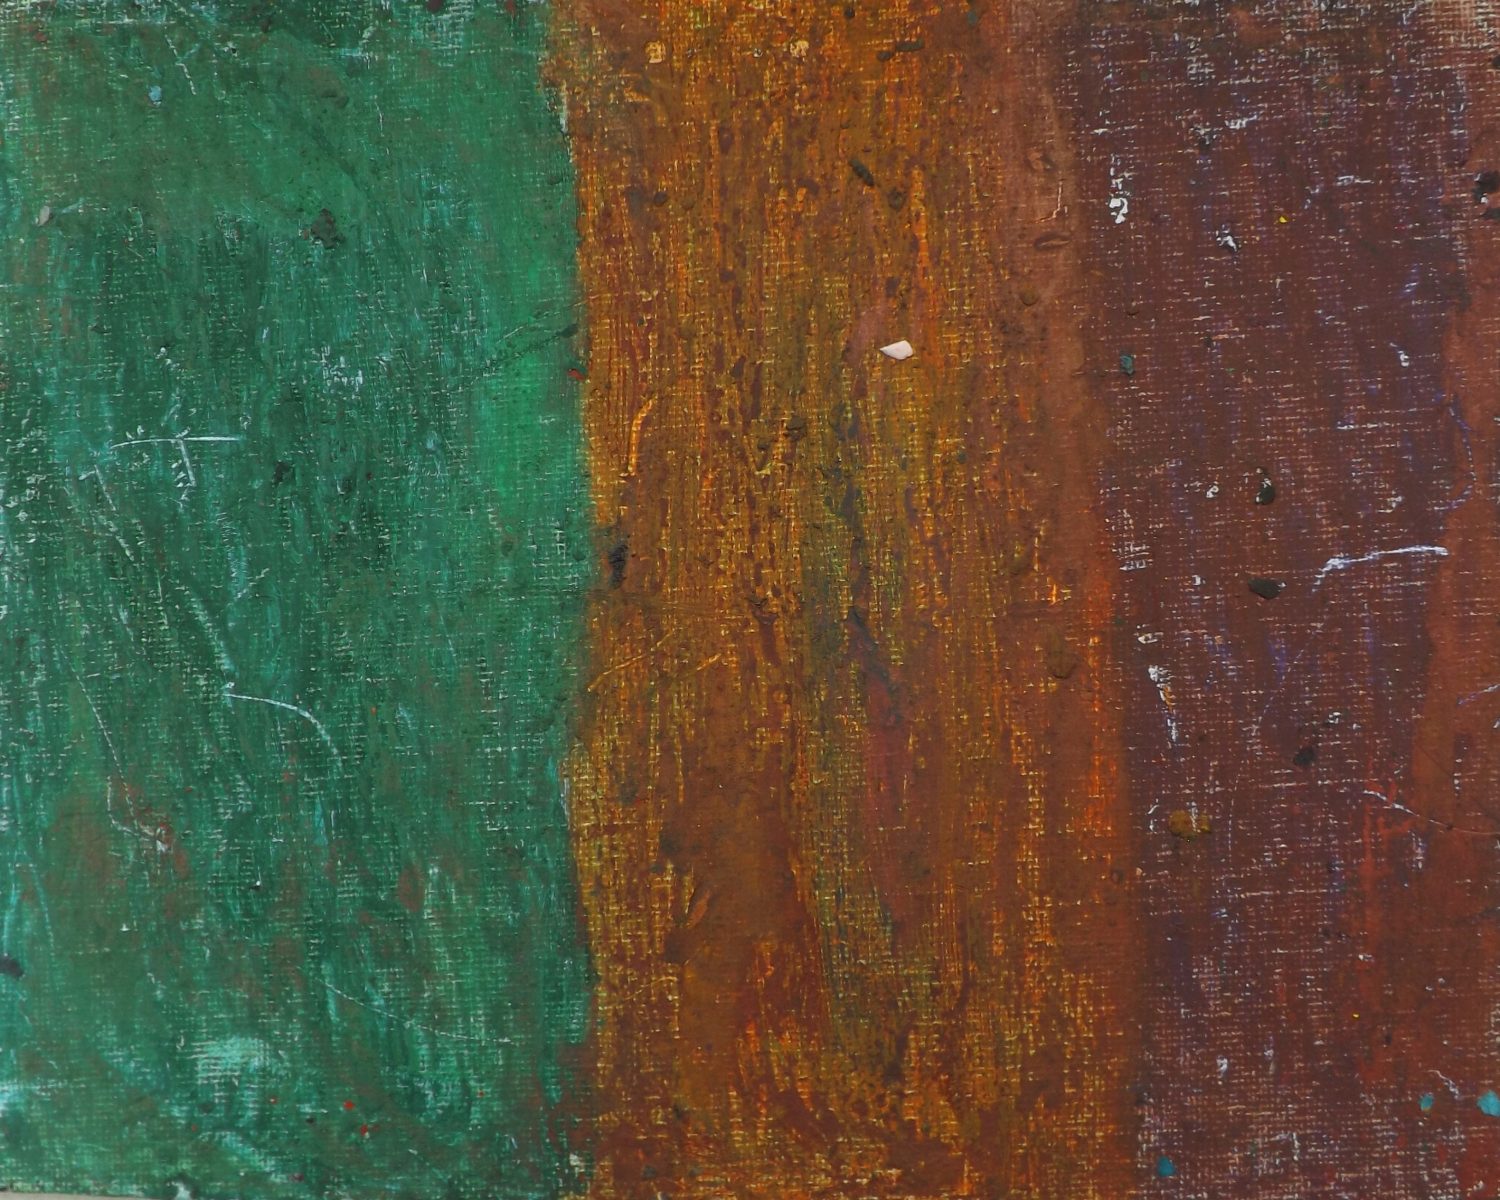 thumbnail of Fall by Stuart. Medium: Pastel on canvas. Date 2014